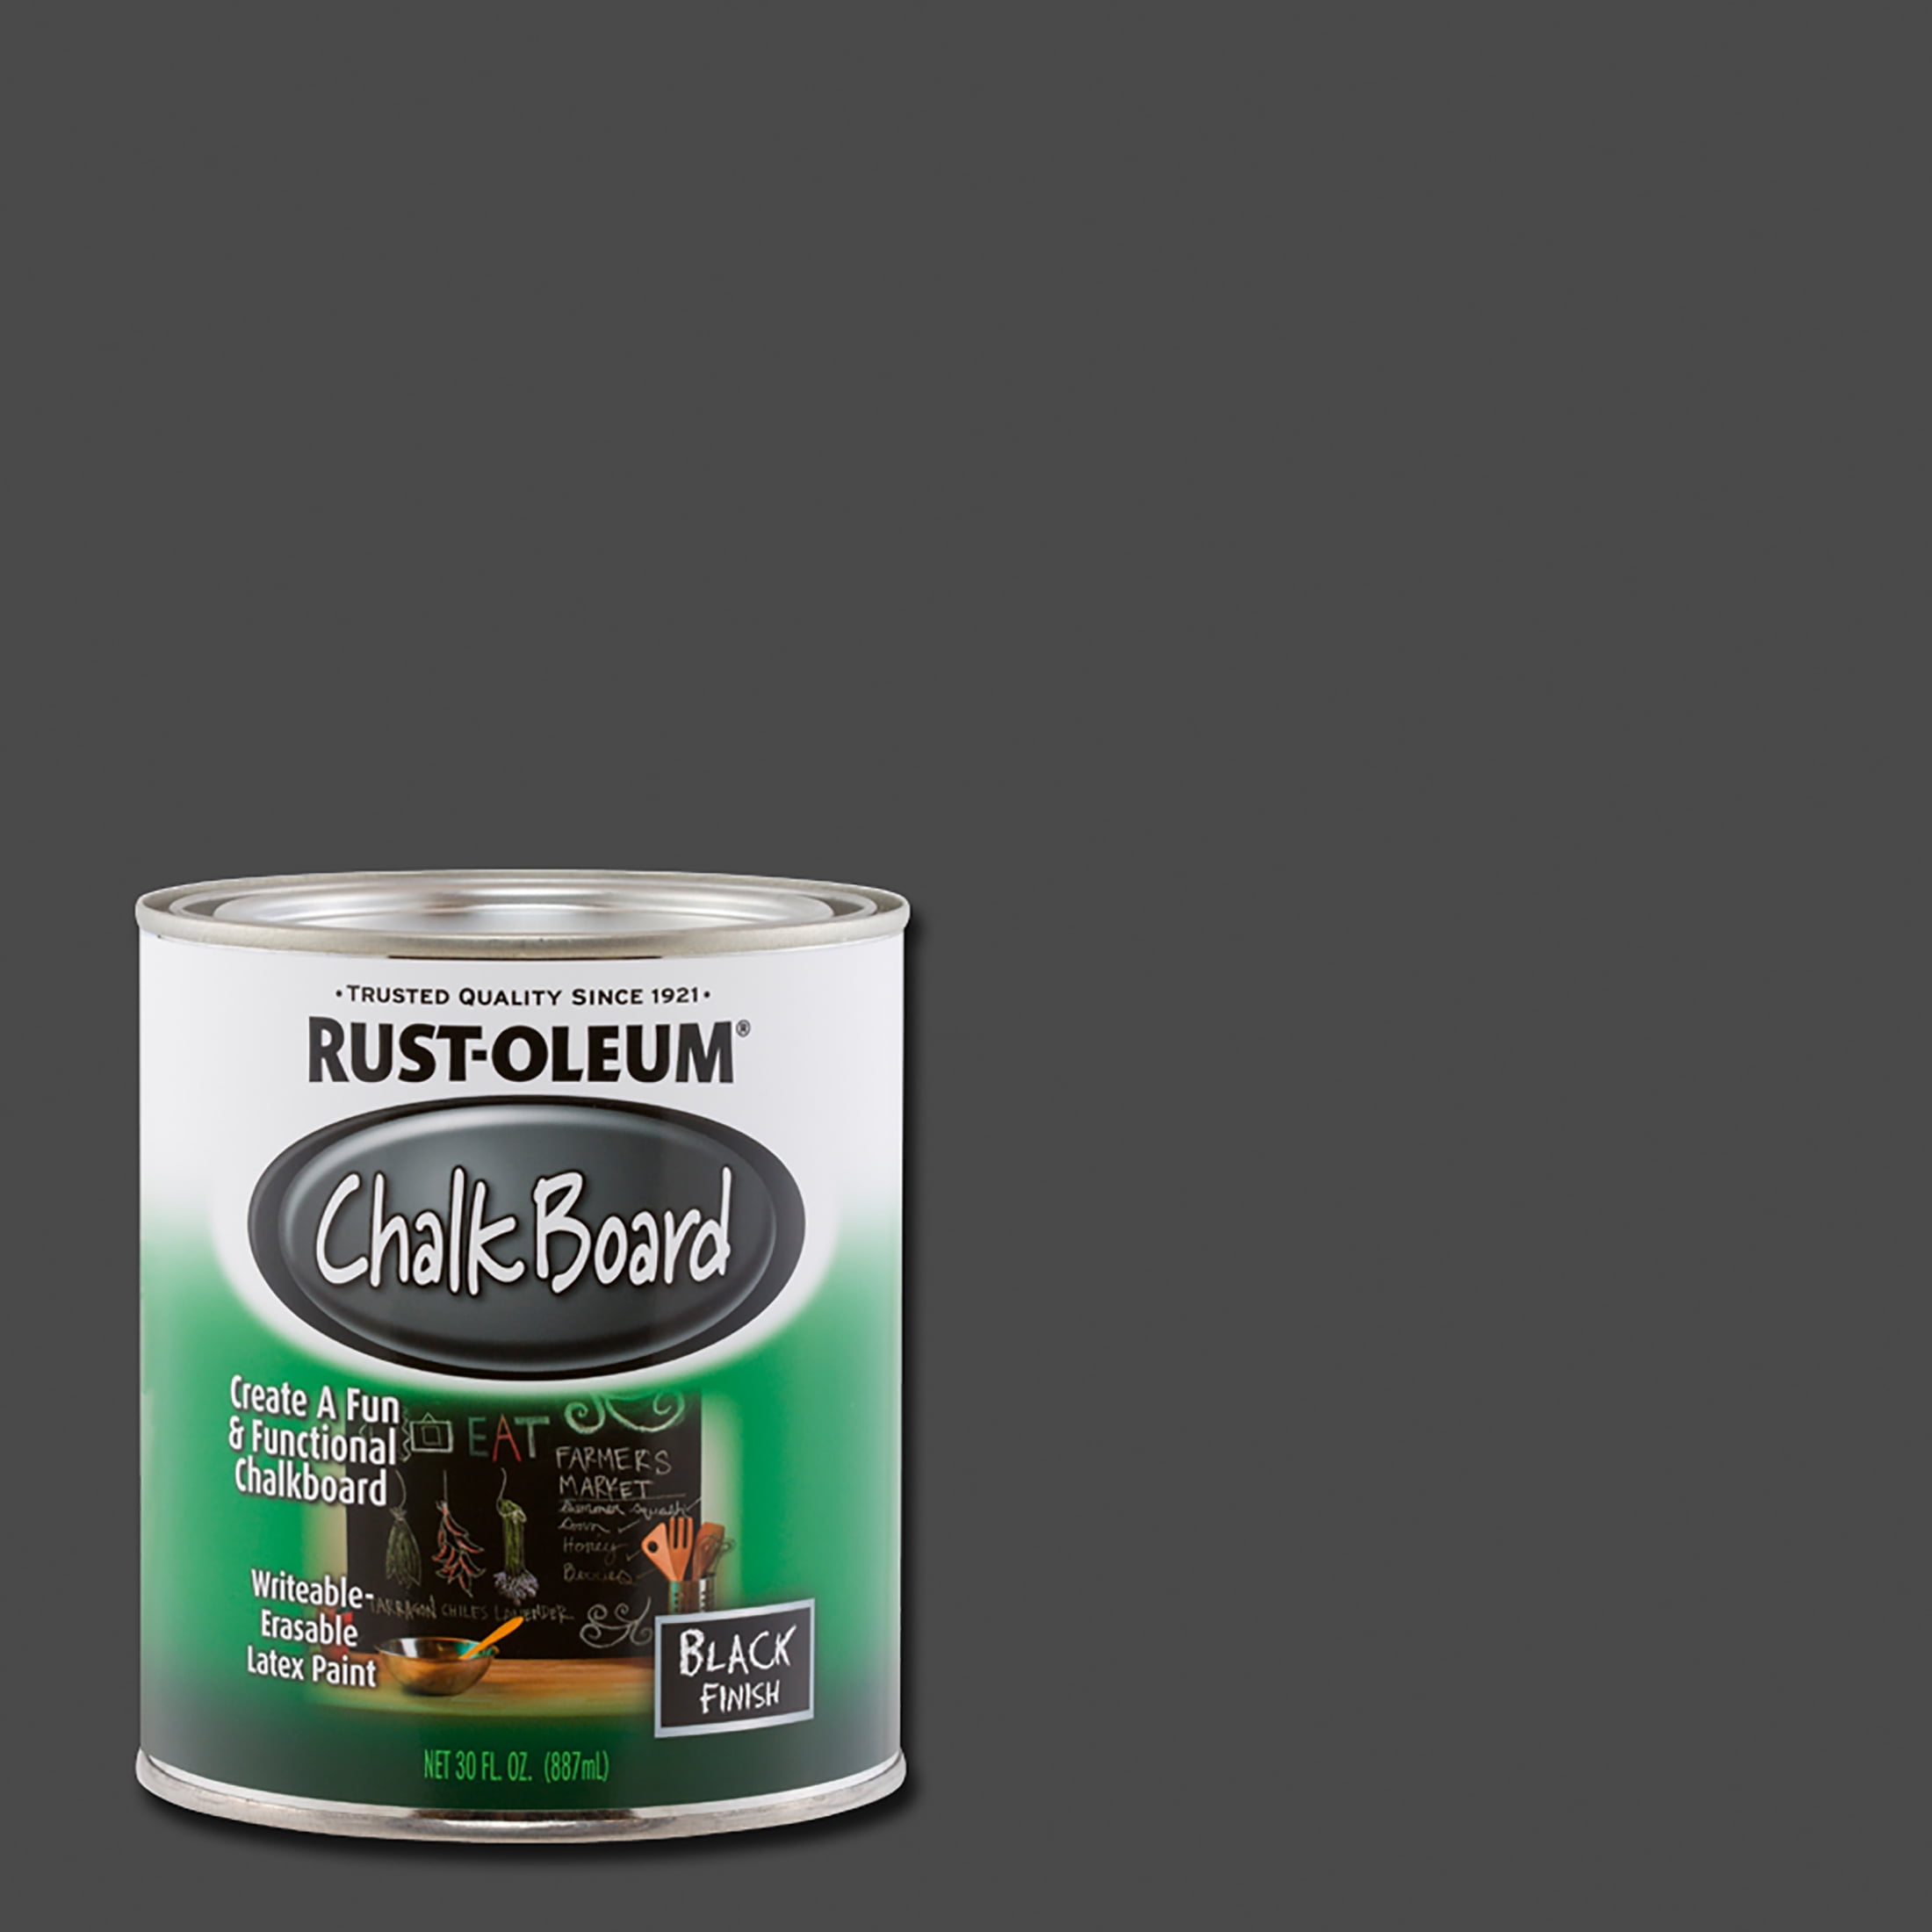  Rust-Oleum 301450 Specialty Chalkboard Brush-On Paint, 30 oz,  Flat Black : Everything Else